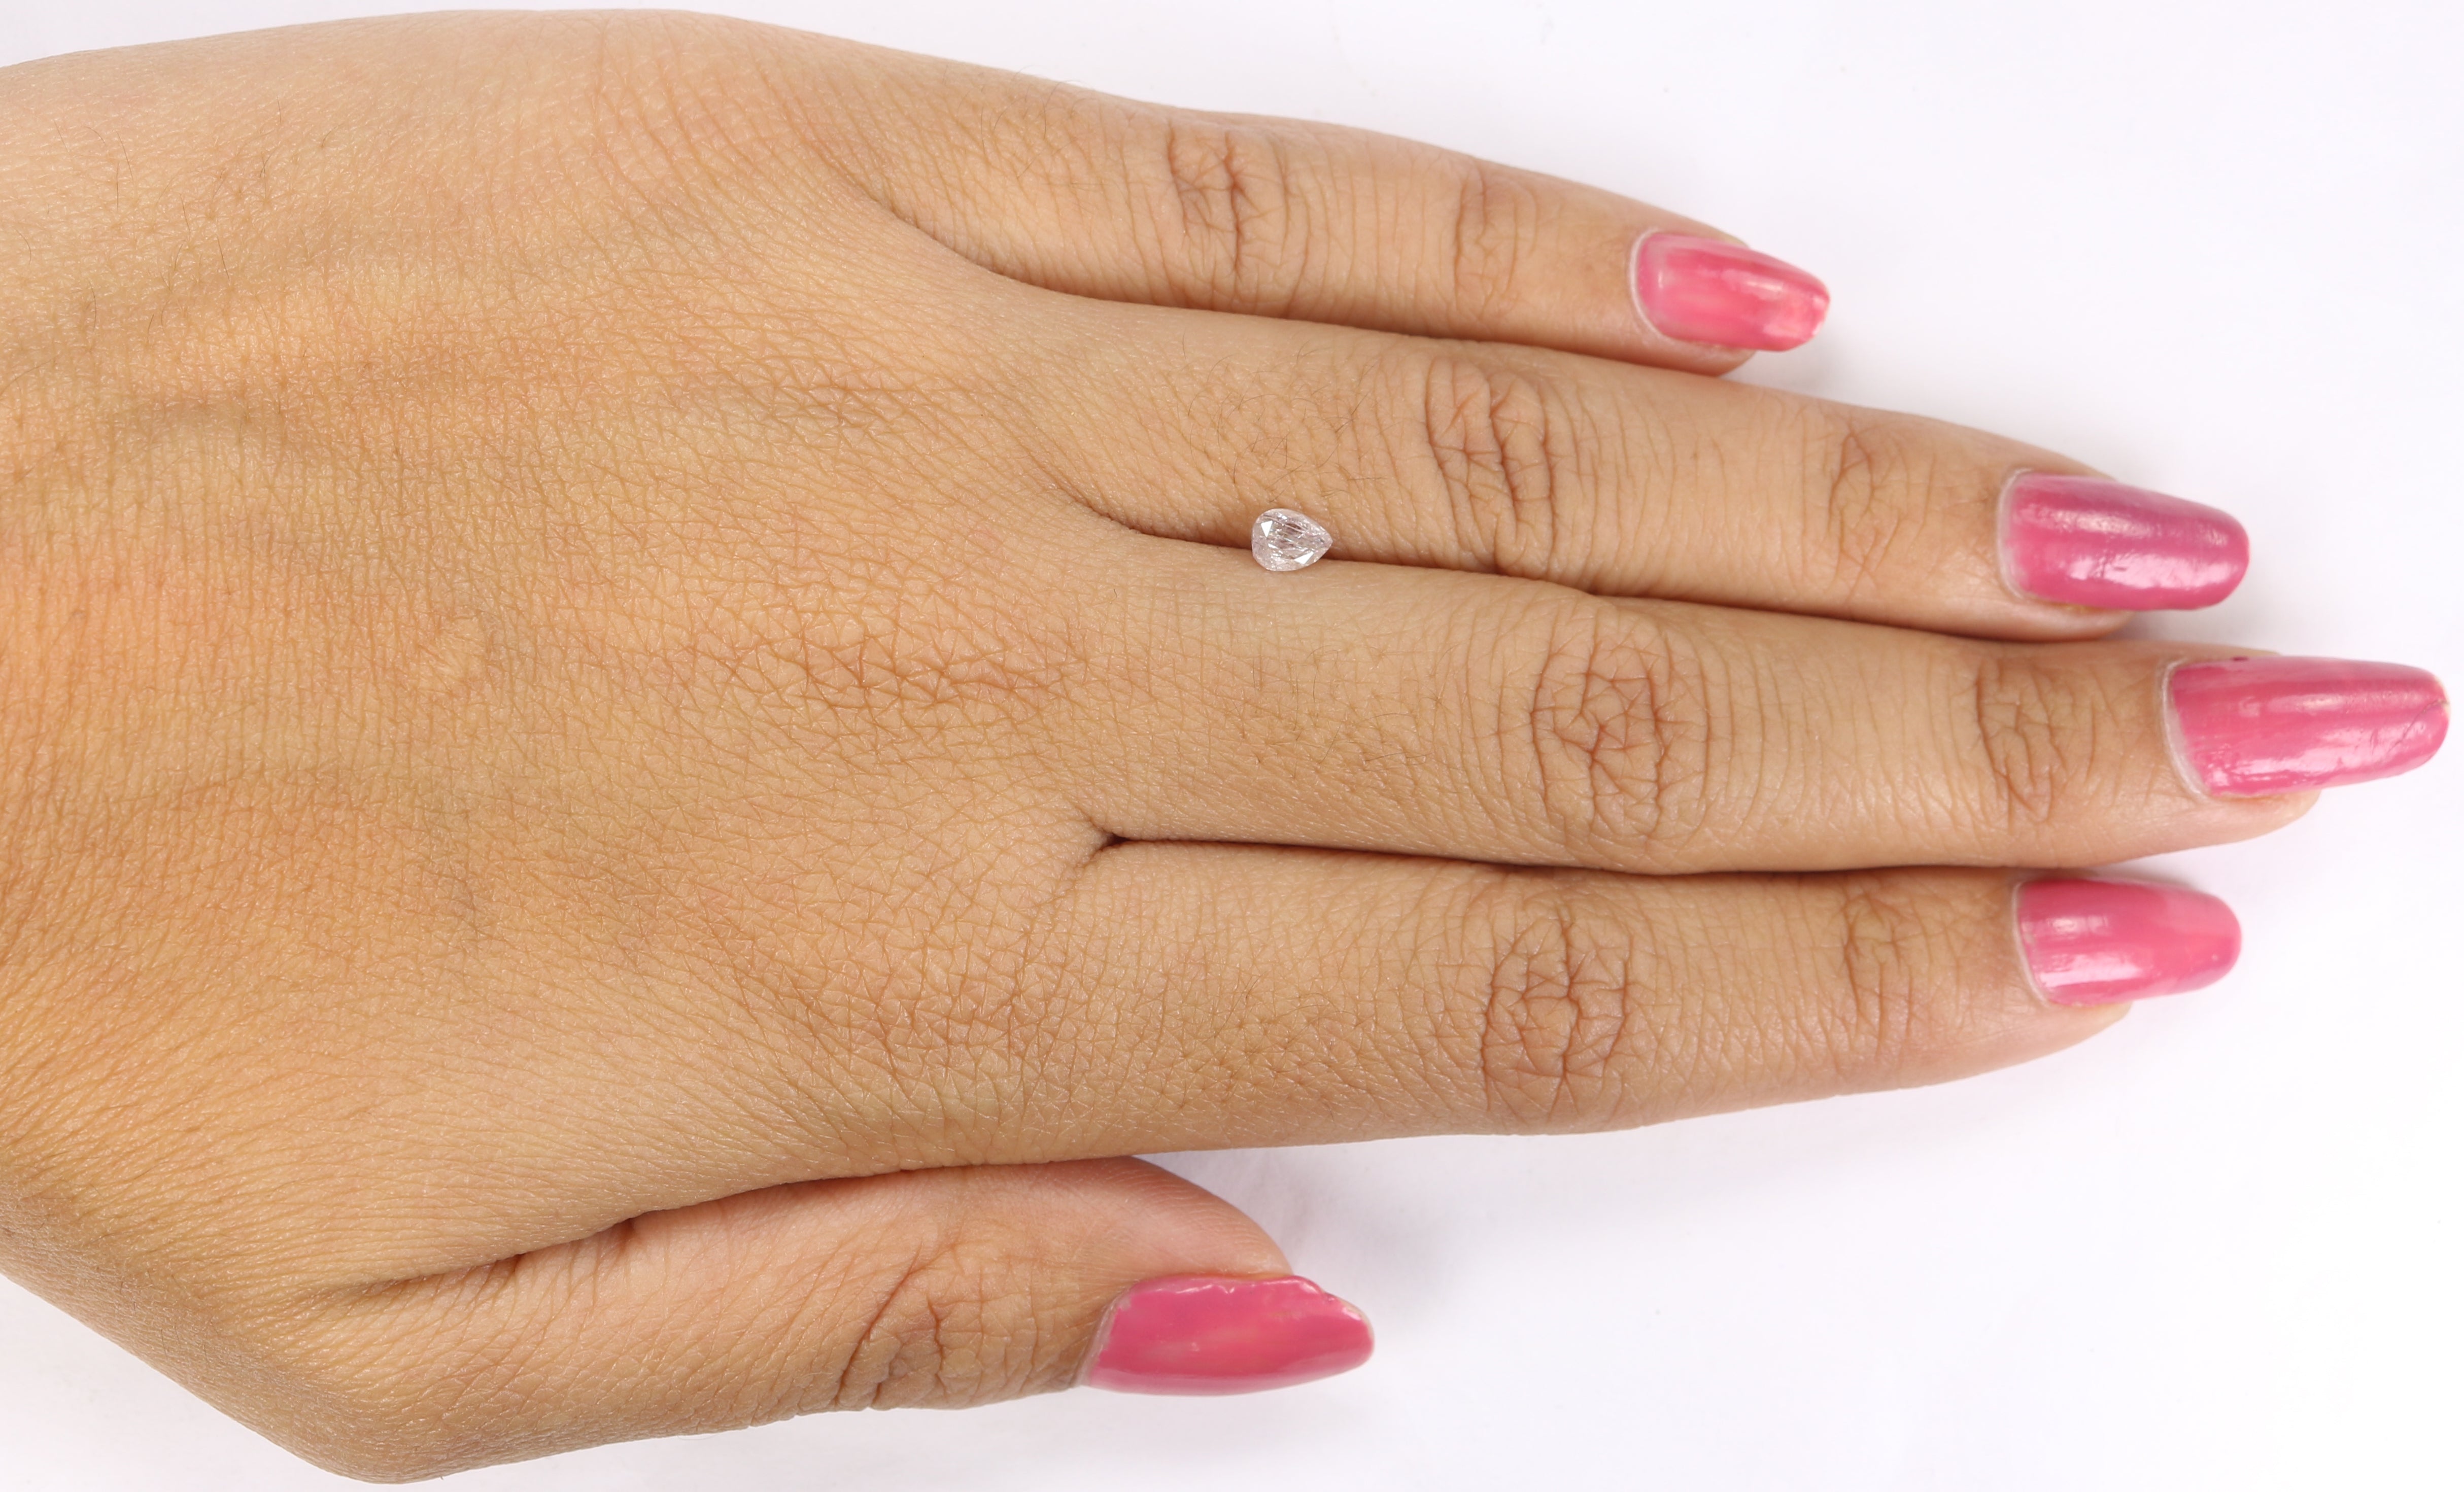 Natural Loose Pear Light pink Color Diamond 0.30 CT 4.90 MM Pear Shape Rose Cut Diamond L1590